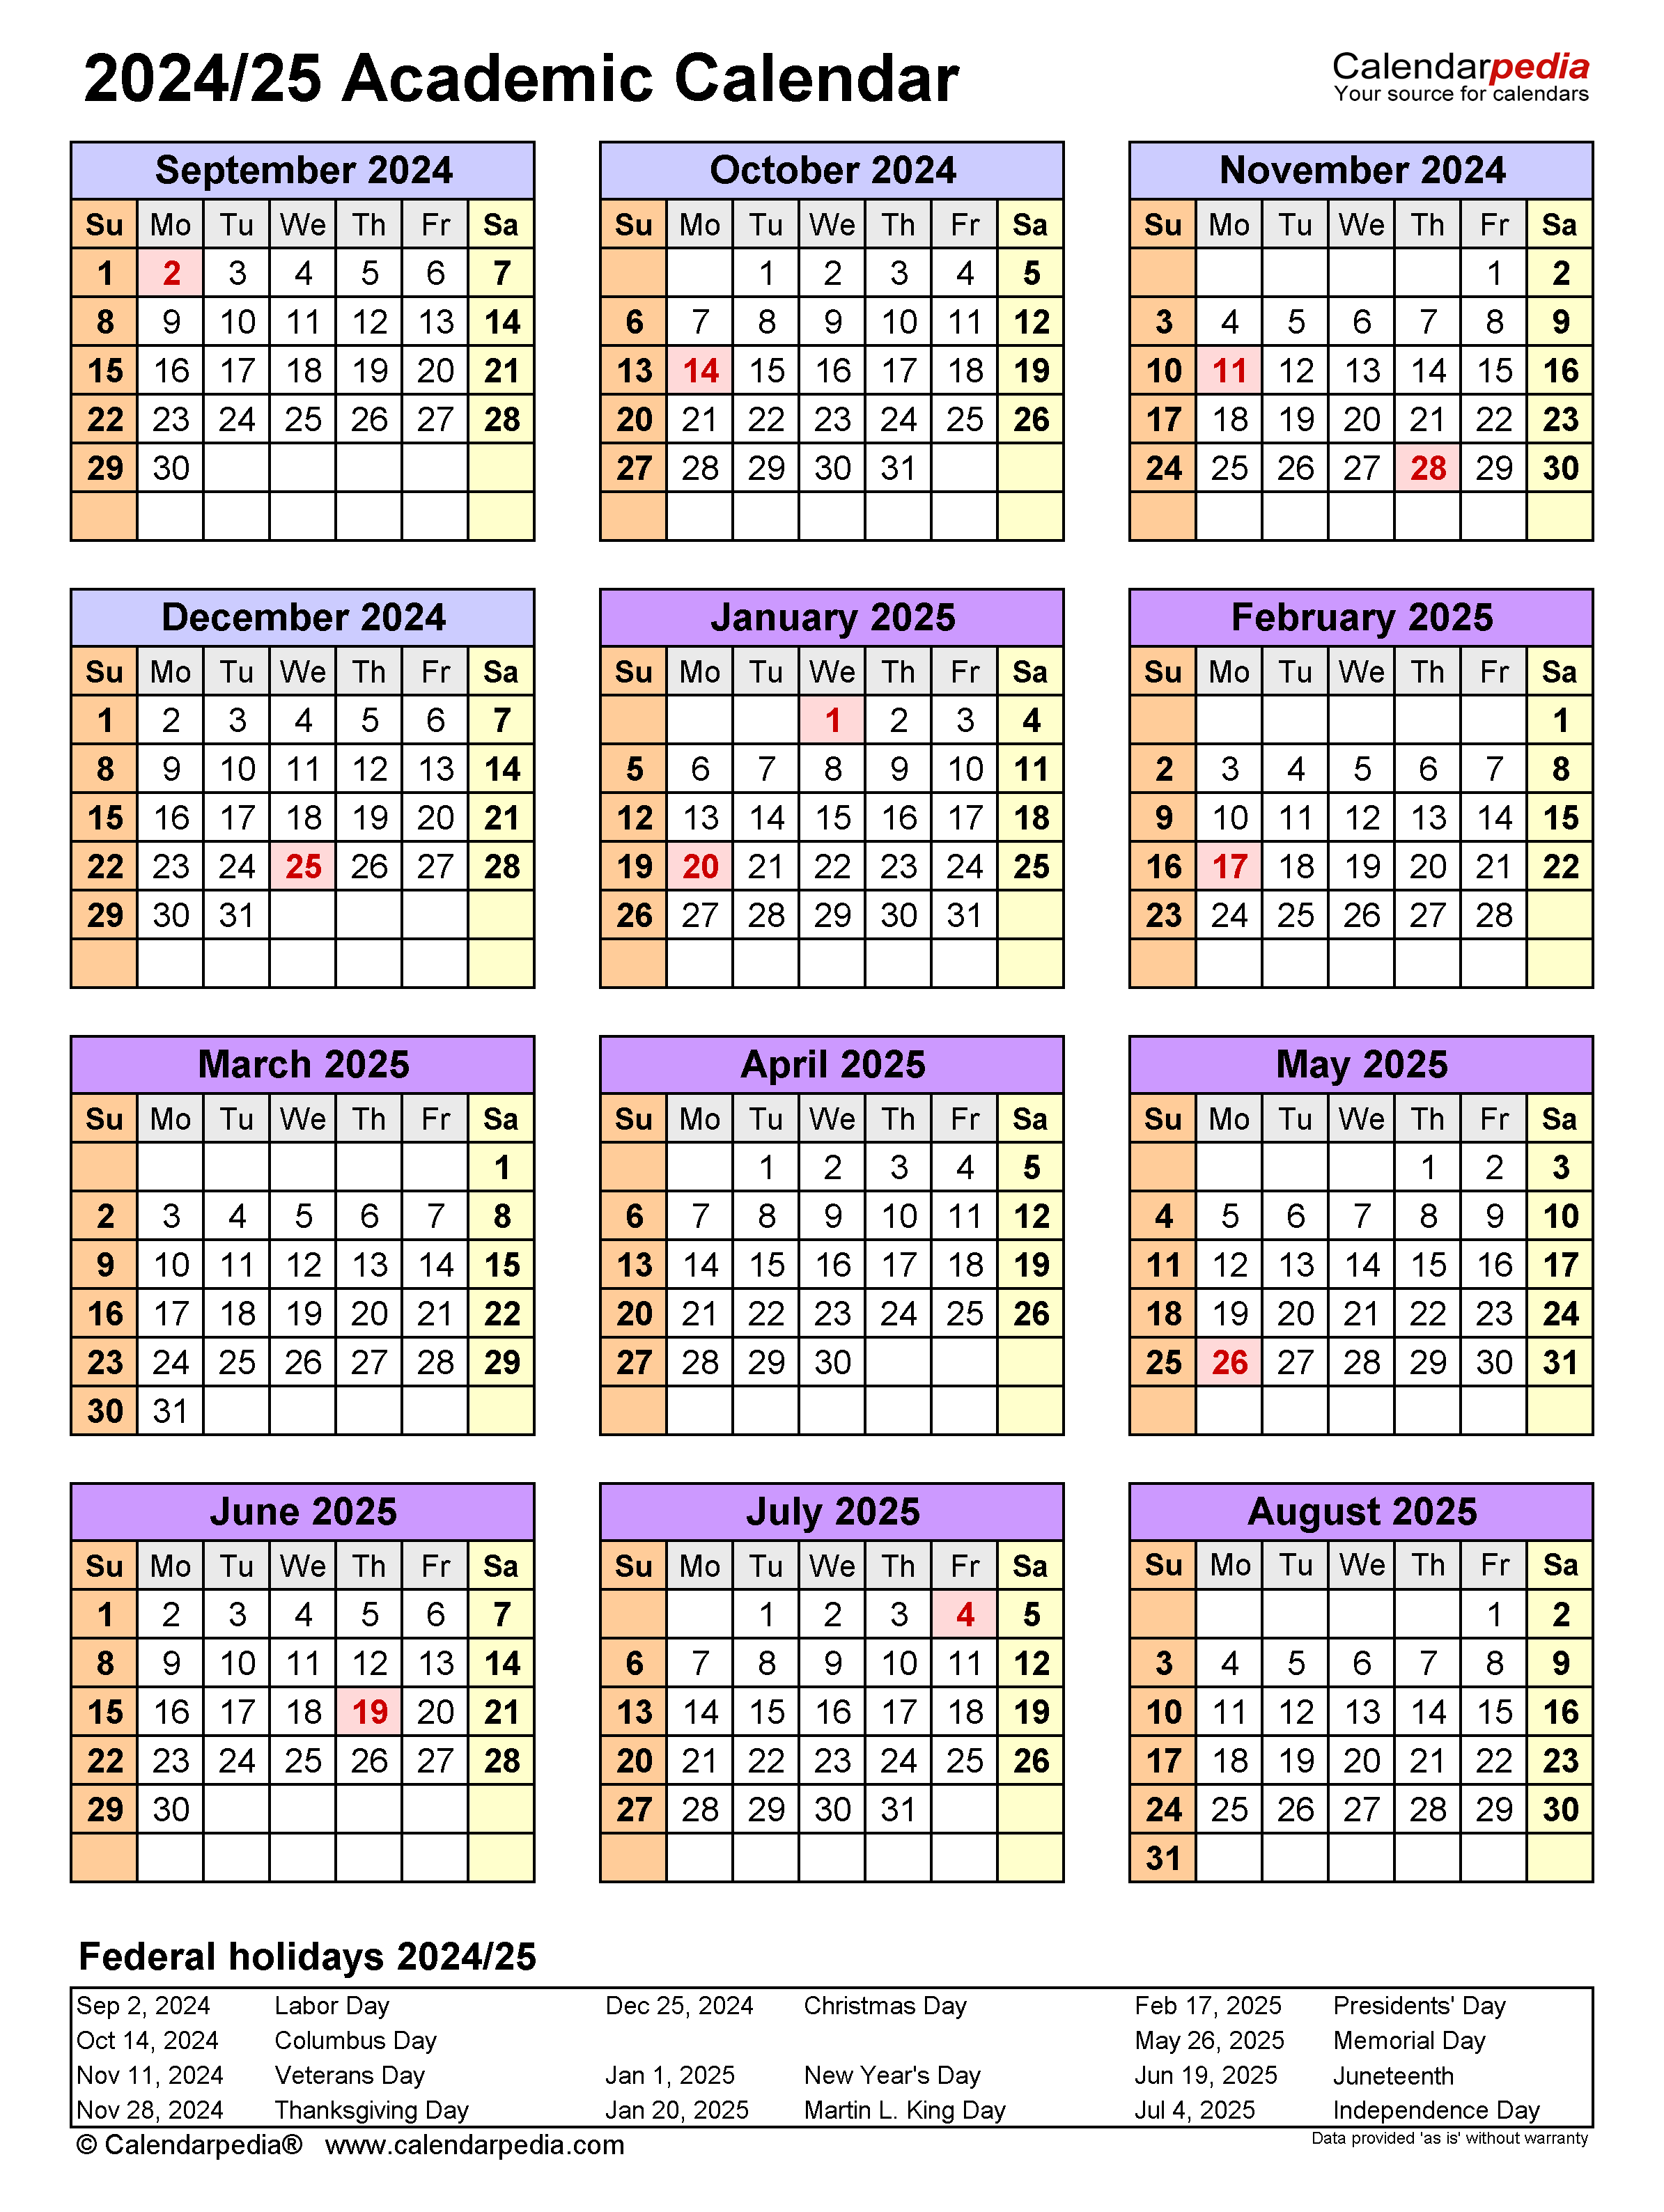 U Of A Academic Calendar 2025